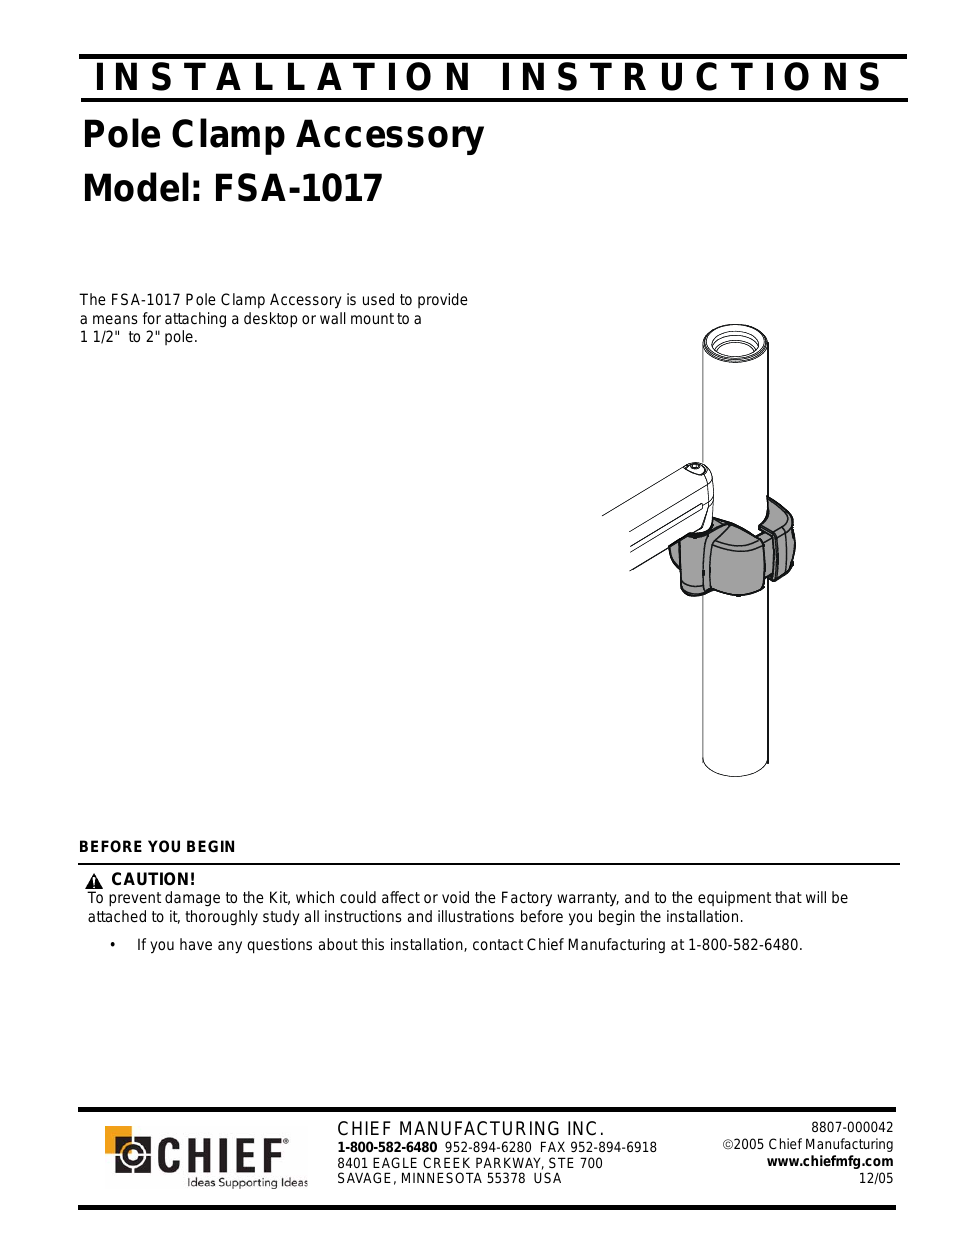 Pole Clamp Accessory FSA-1017